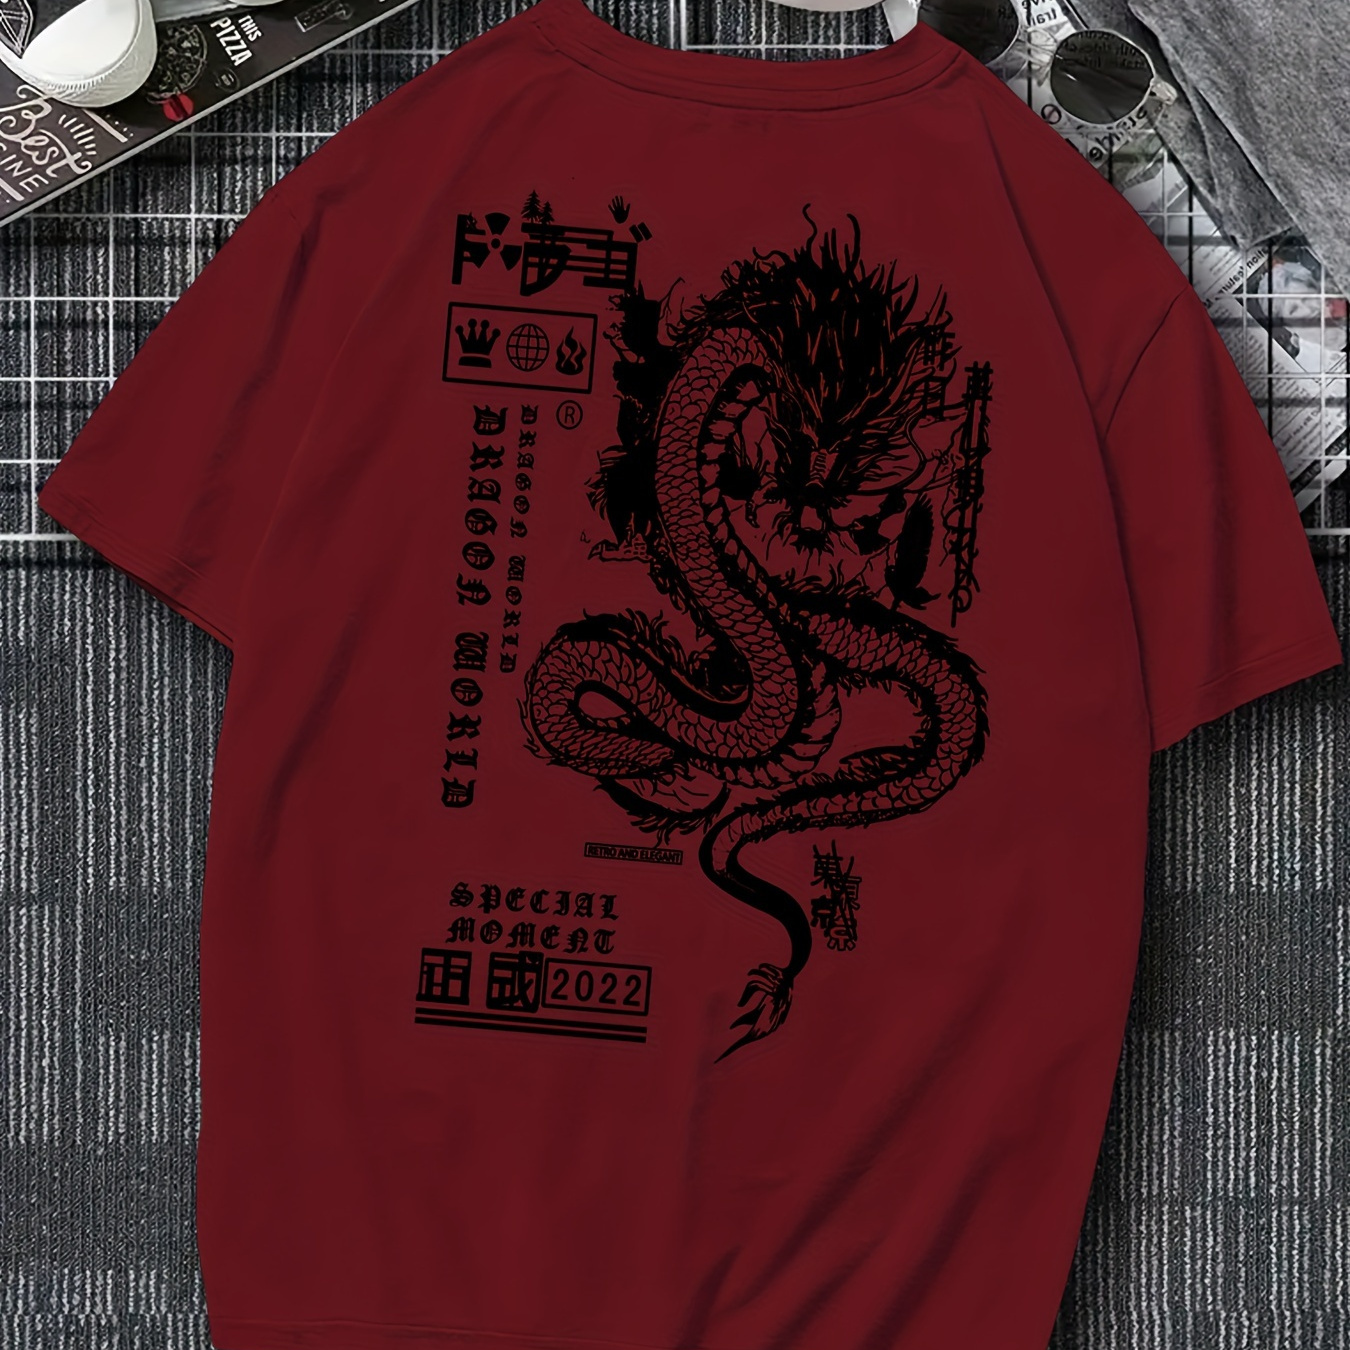 

Tokyo Dragon Print Tee Shirt, Tees For Men, Casual Short Sleeve T-shirt For Summer